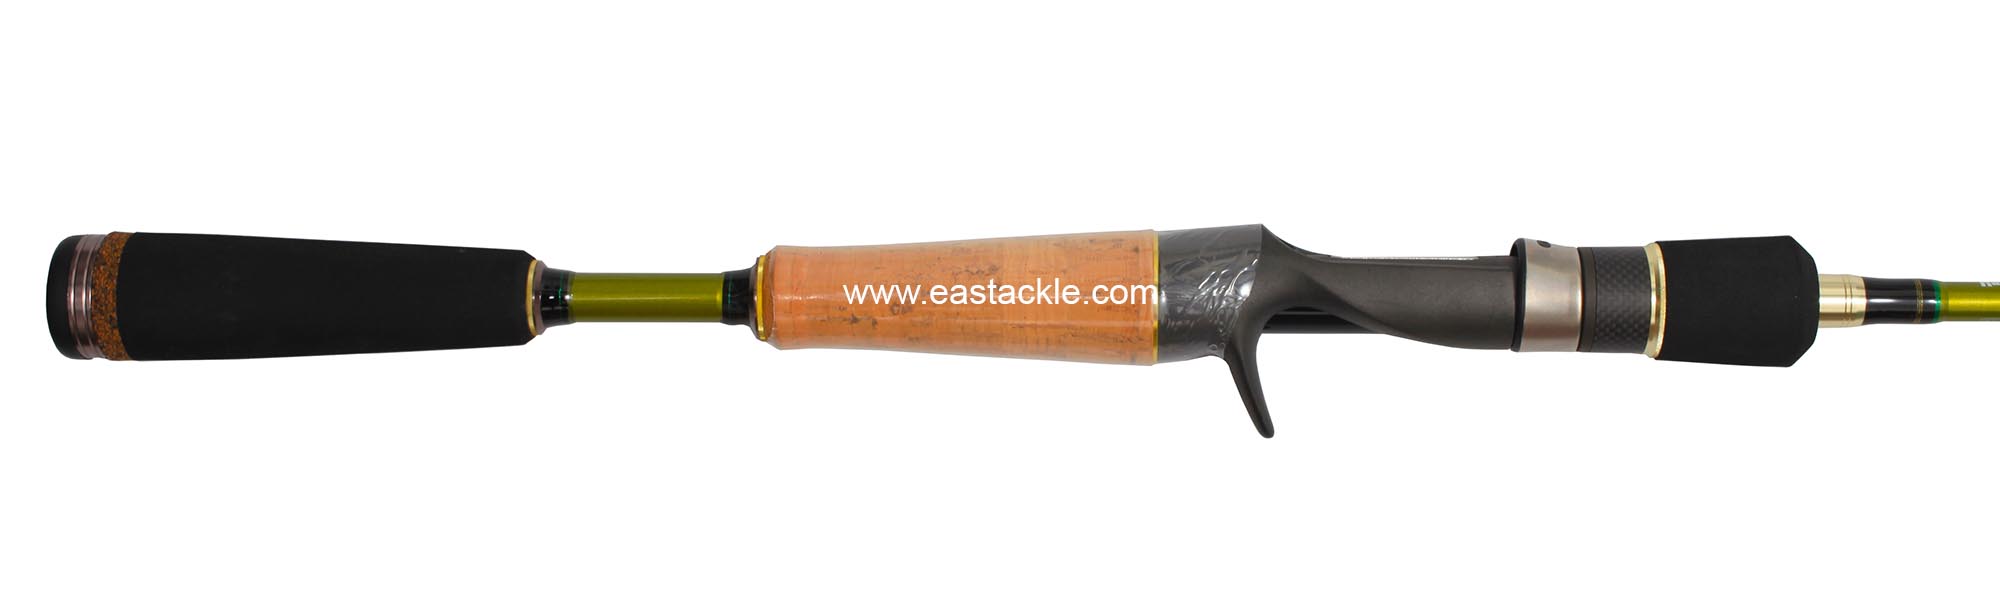 Rapala - Koivu - KVC652L - Bait Casting Rod - Handle Section (Side View) | Eastackle